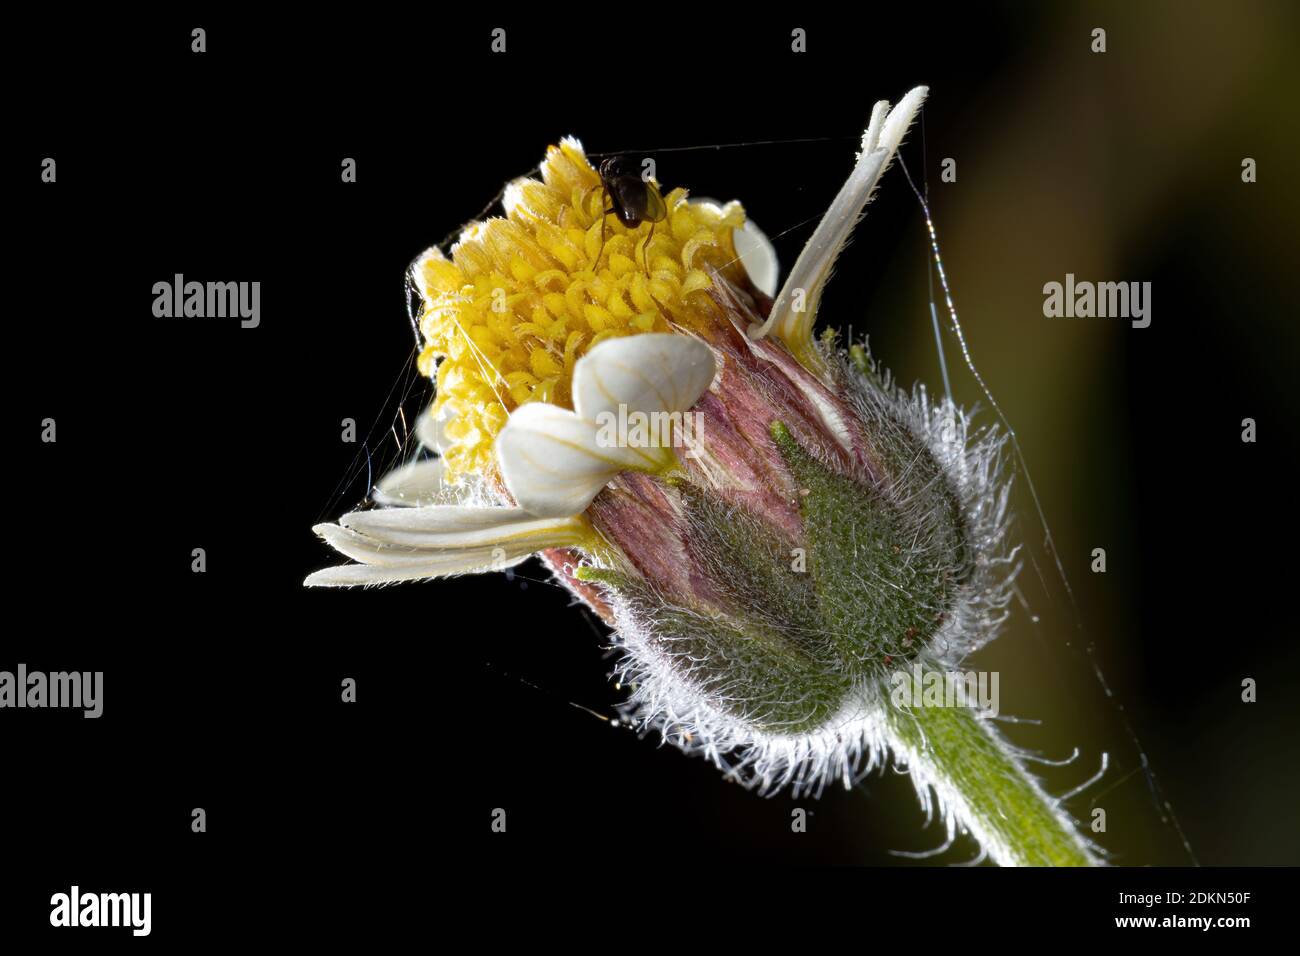 Flower of the plant Tridax procumbens Stock Photo